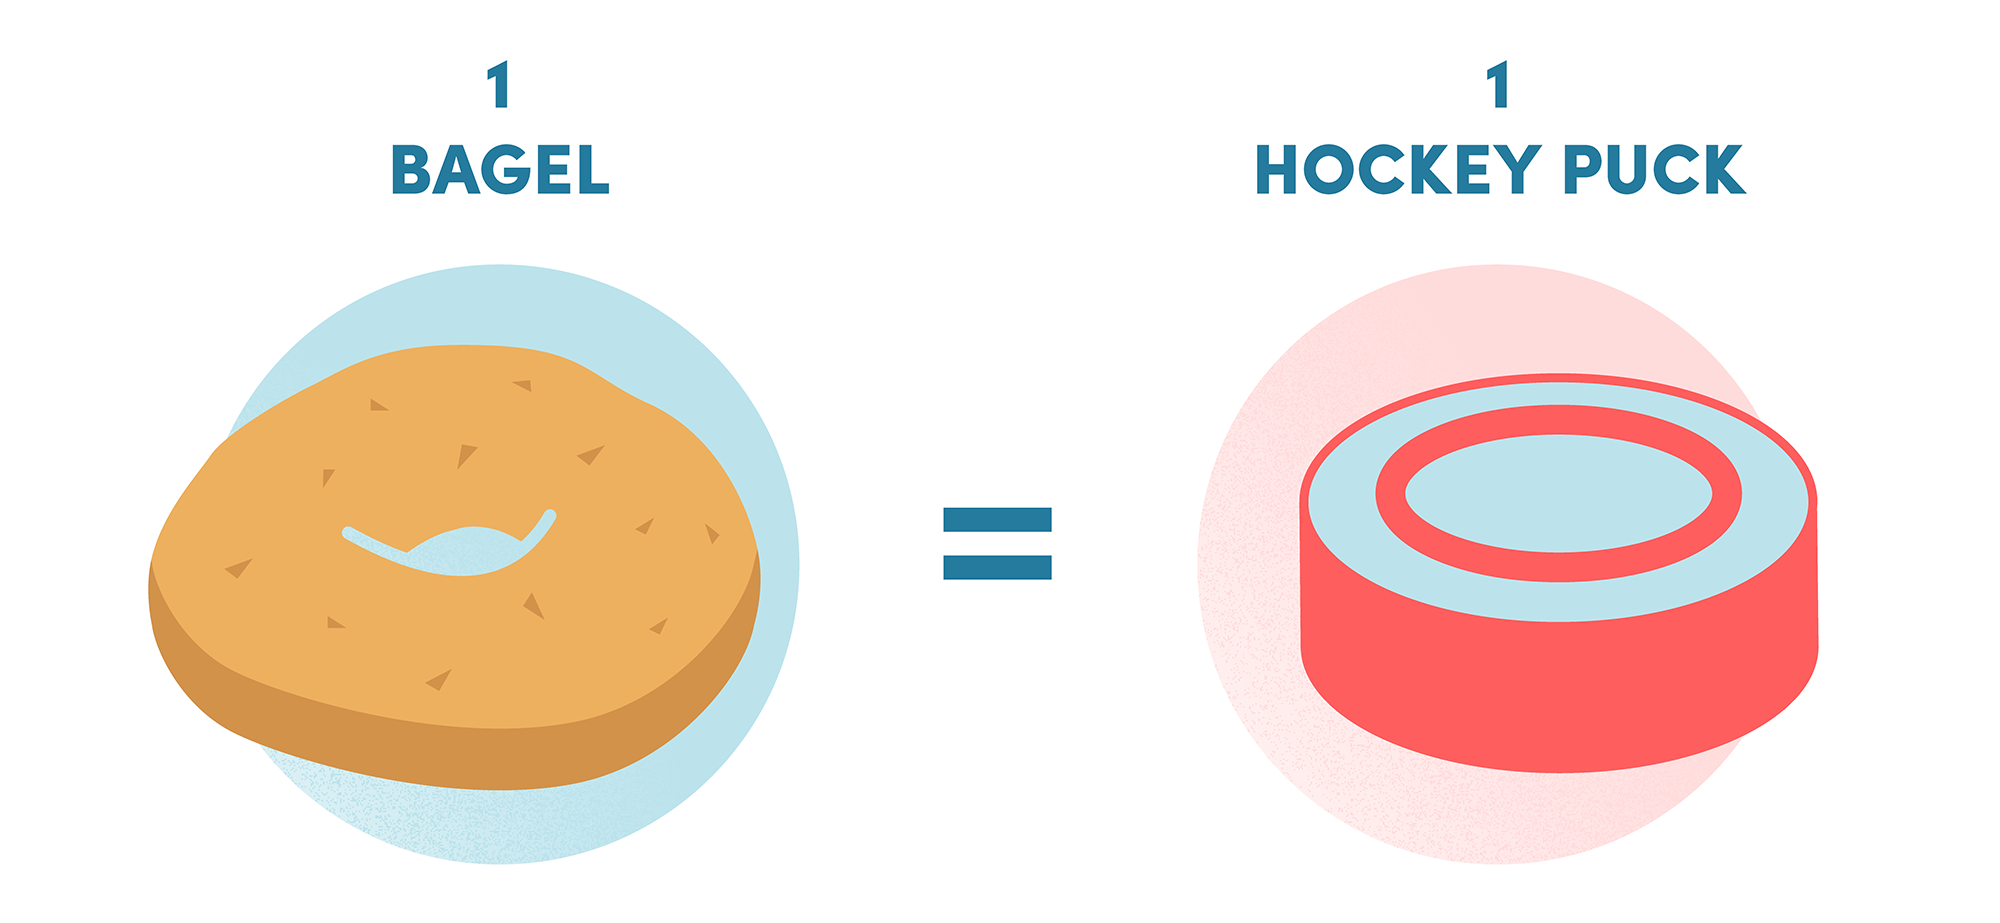 1 Bagel = A Hockey Puck